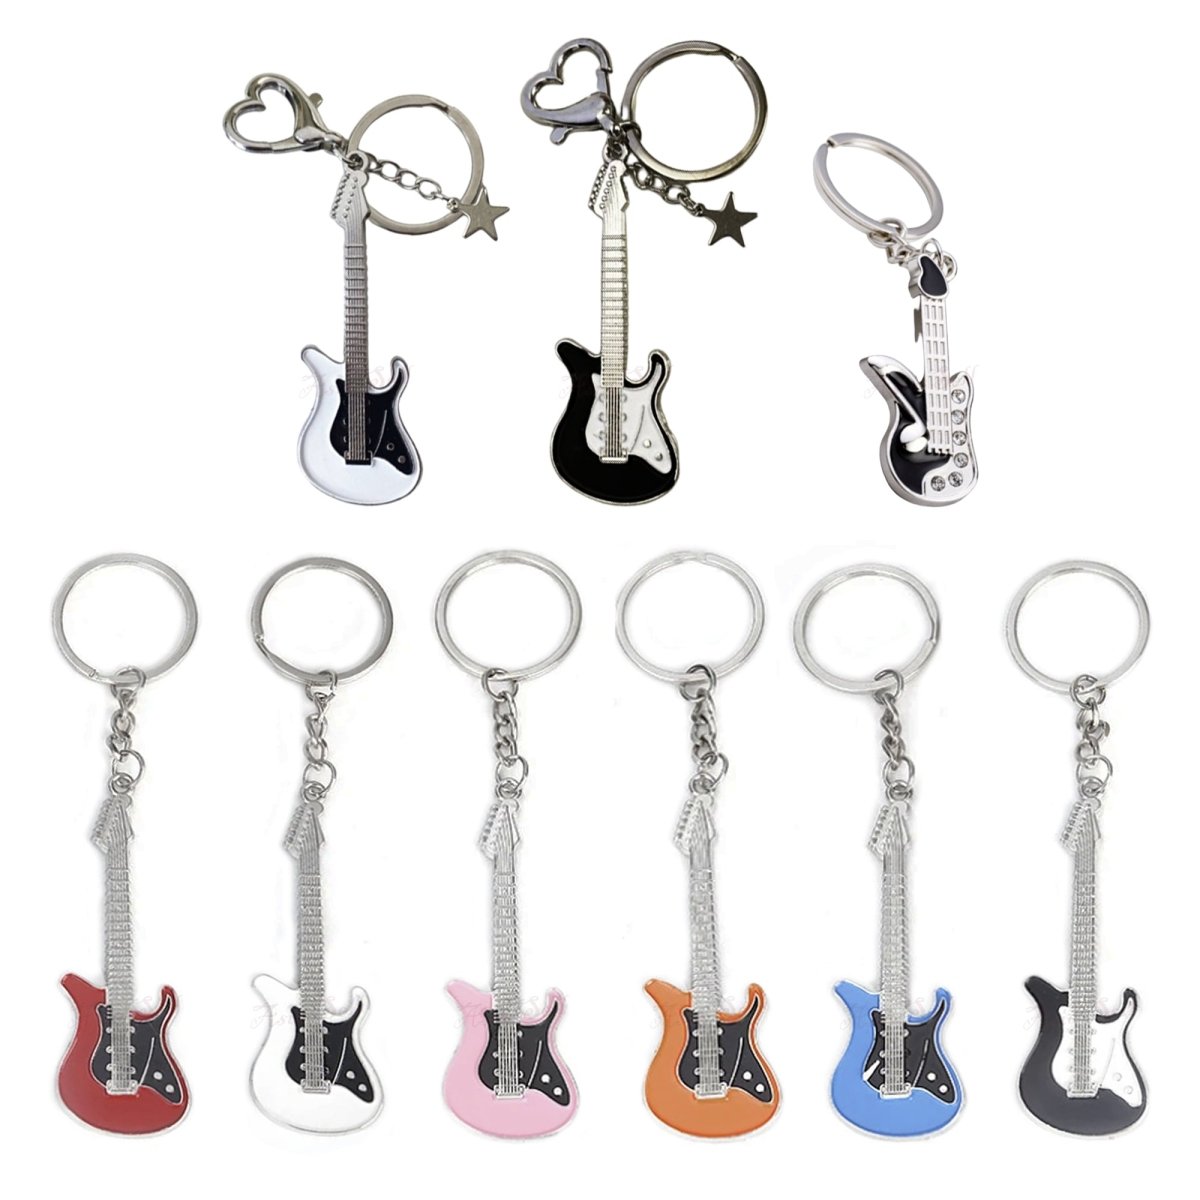 30mm Keyring Guitar Keychain 7.5cm Key Ring Key Chain Bag Accessory Holder Pendant Tag - Black White - - Asia Sell